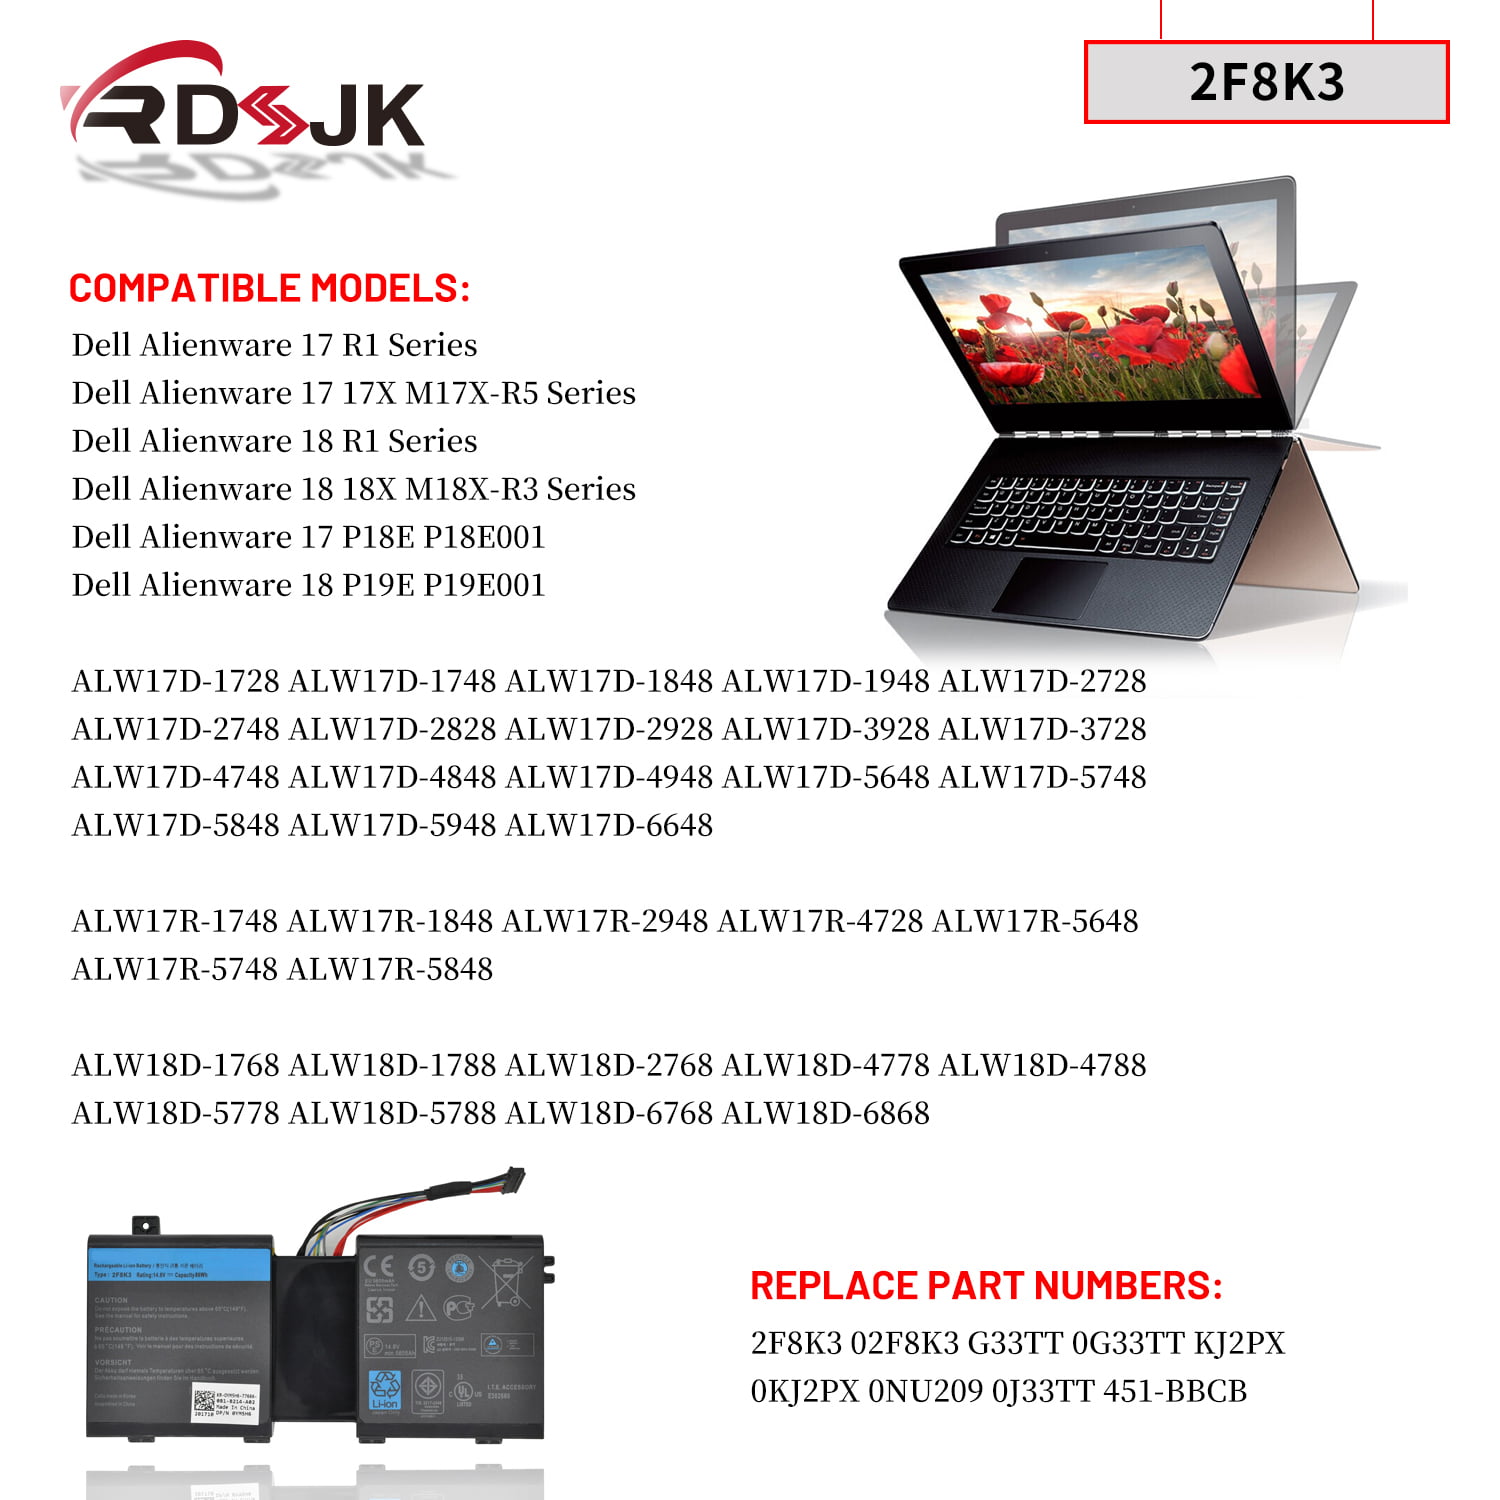 2F8K3 Battery Replacement for Dell Alienware 17 R1 17X M17X-R5 Alienware 18  R1 18X M18X-R3 Series Gaming Laptop 02F8K3 KJ2PX 0KJ2PX 0NU209 G33TT 